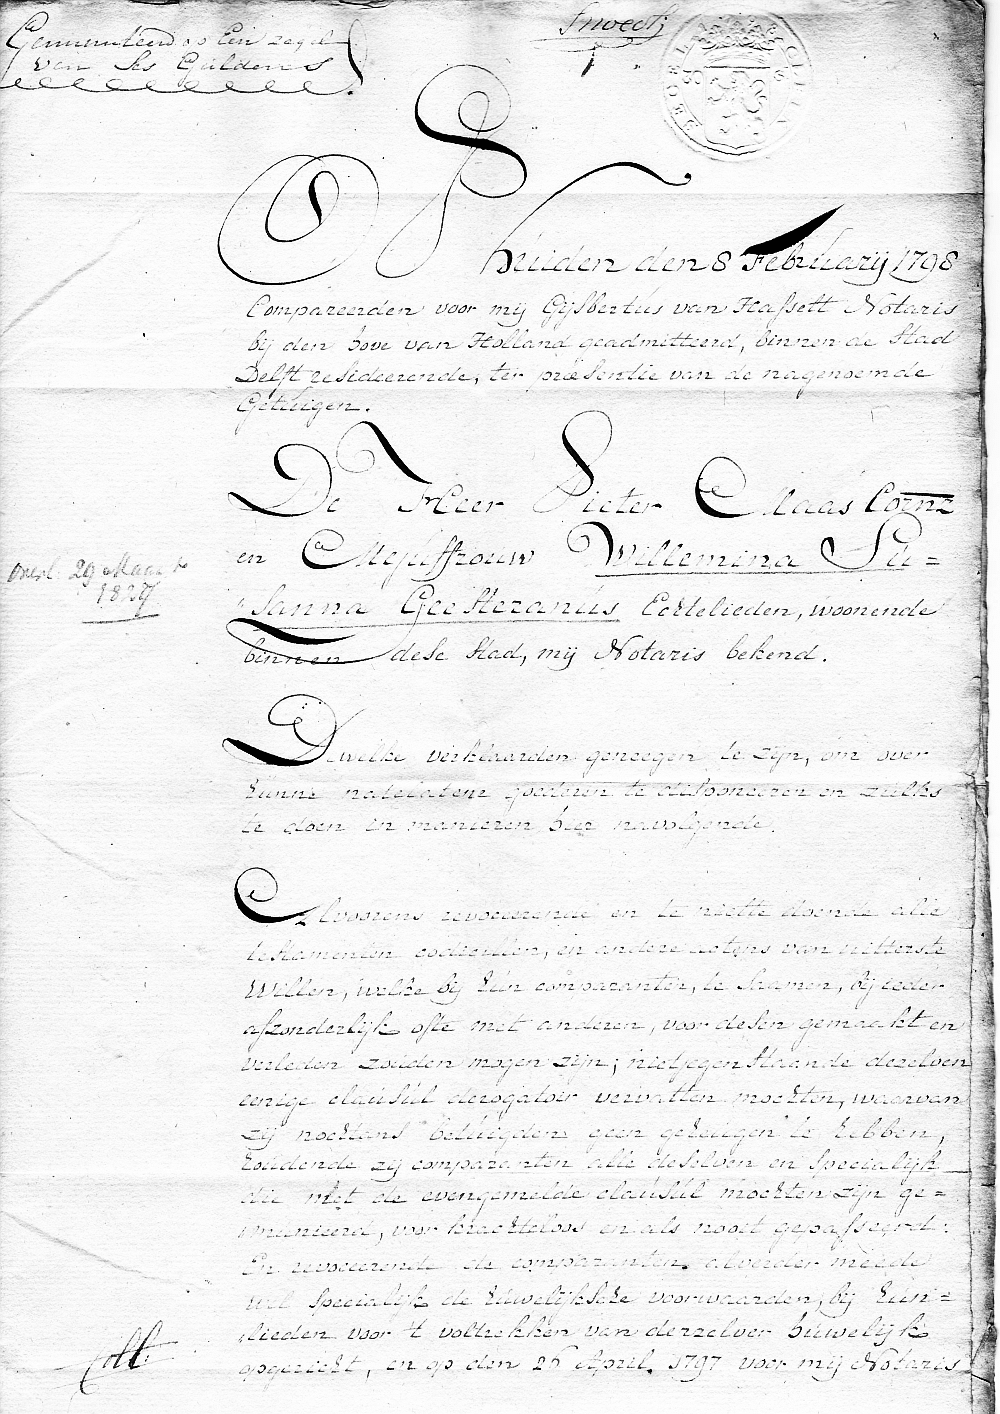 Testament van Pieter Maas Czn en Willemina Suzanna Geesteranus (1798-02-08)